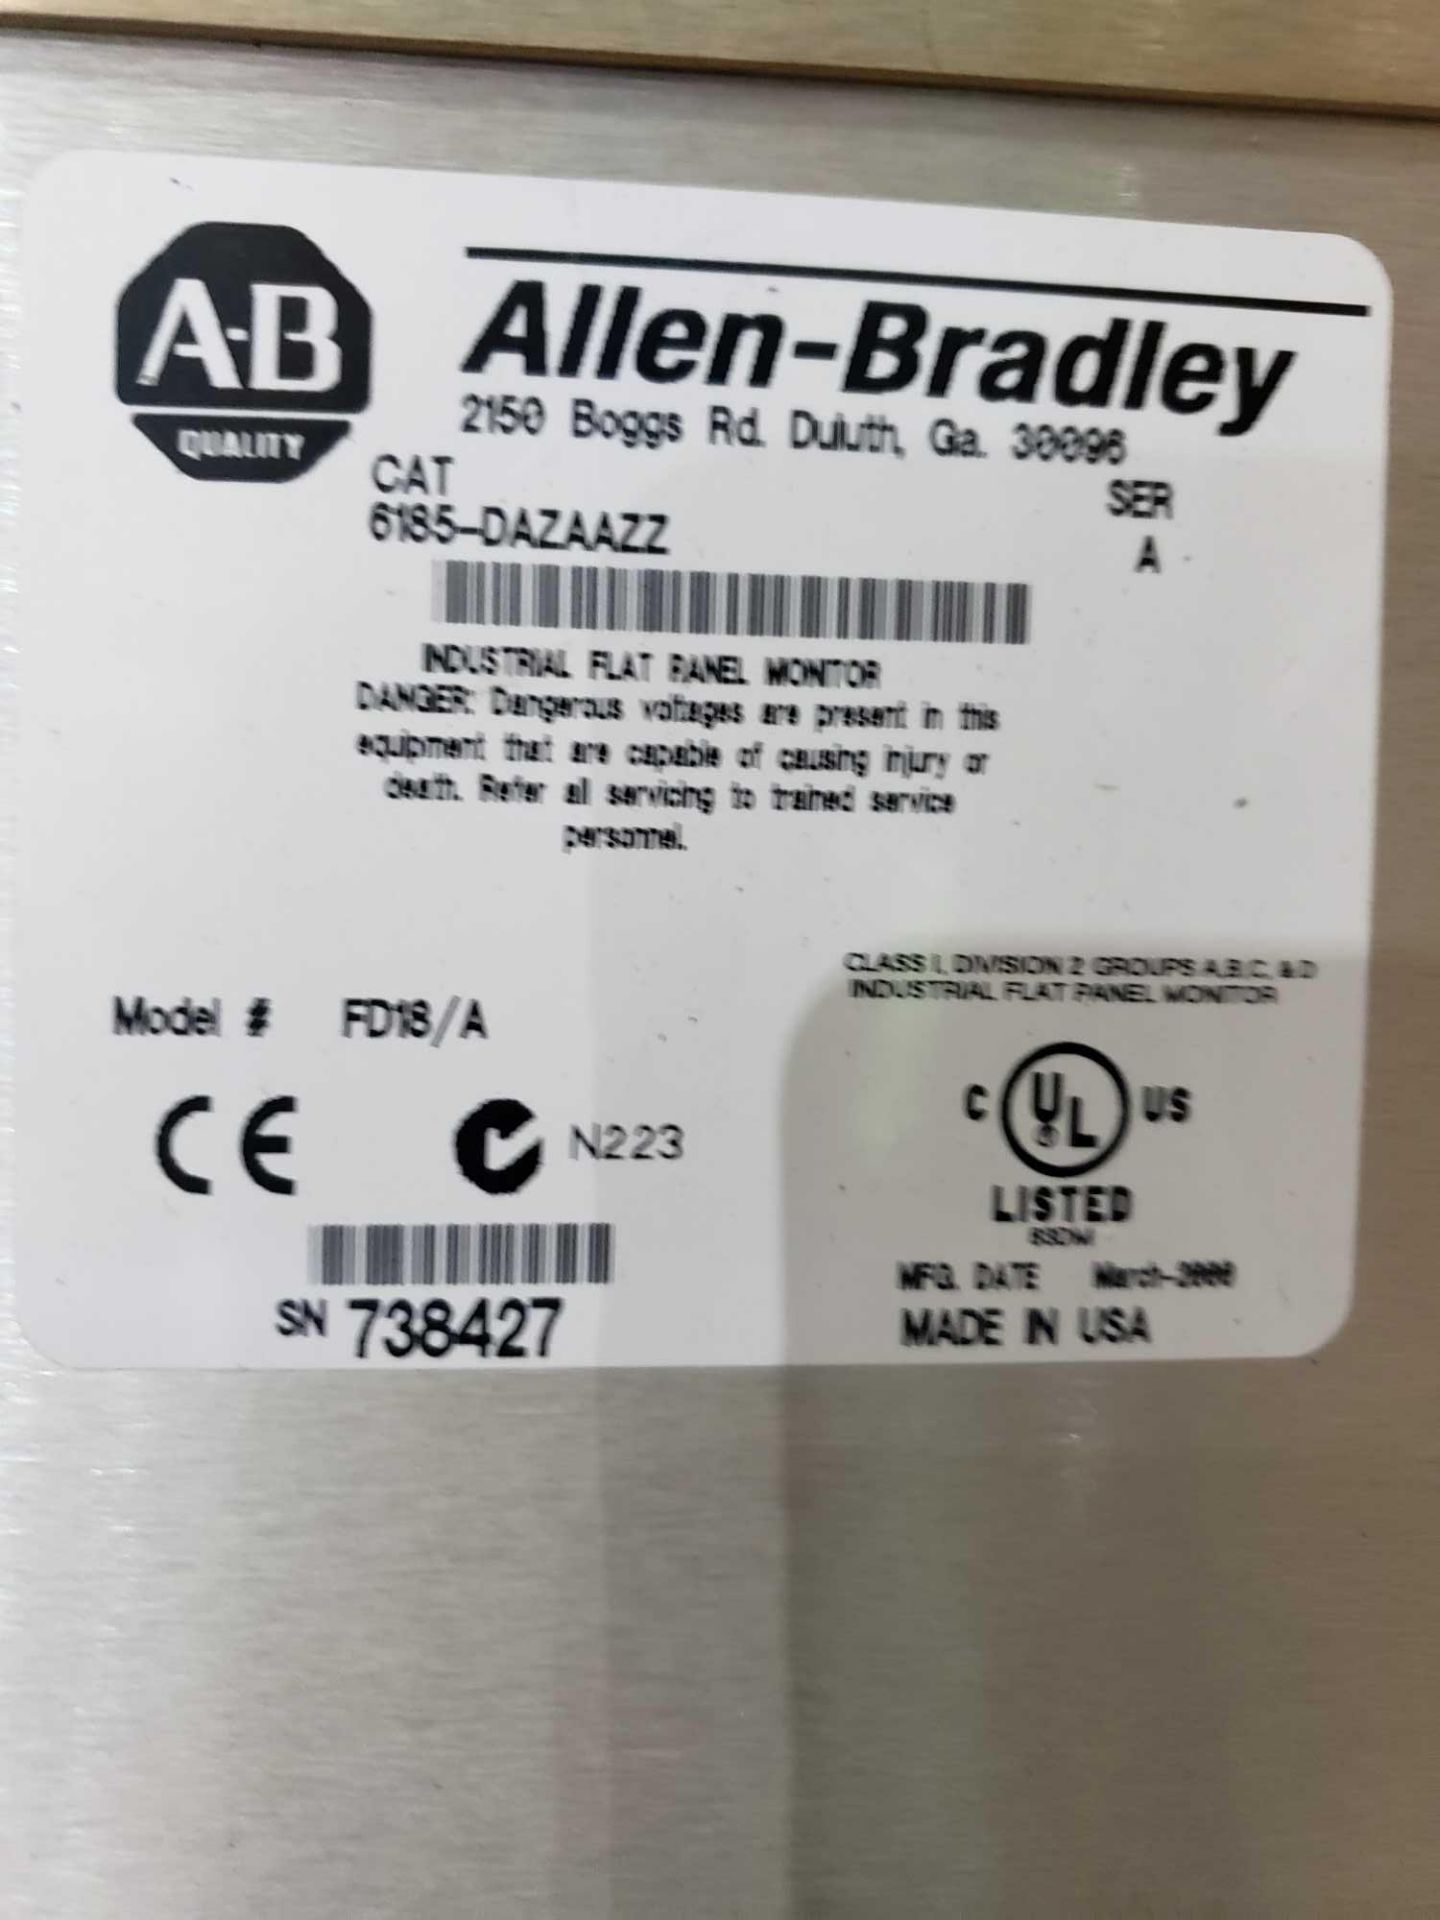 Allen Bradley Catalog 6185-DAZAAZZ. - Image 2 of 2